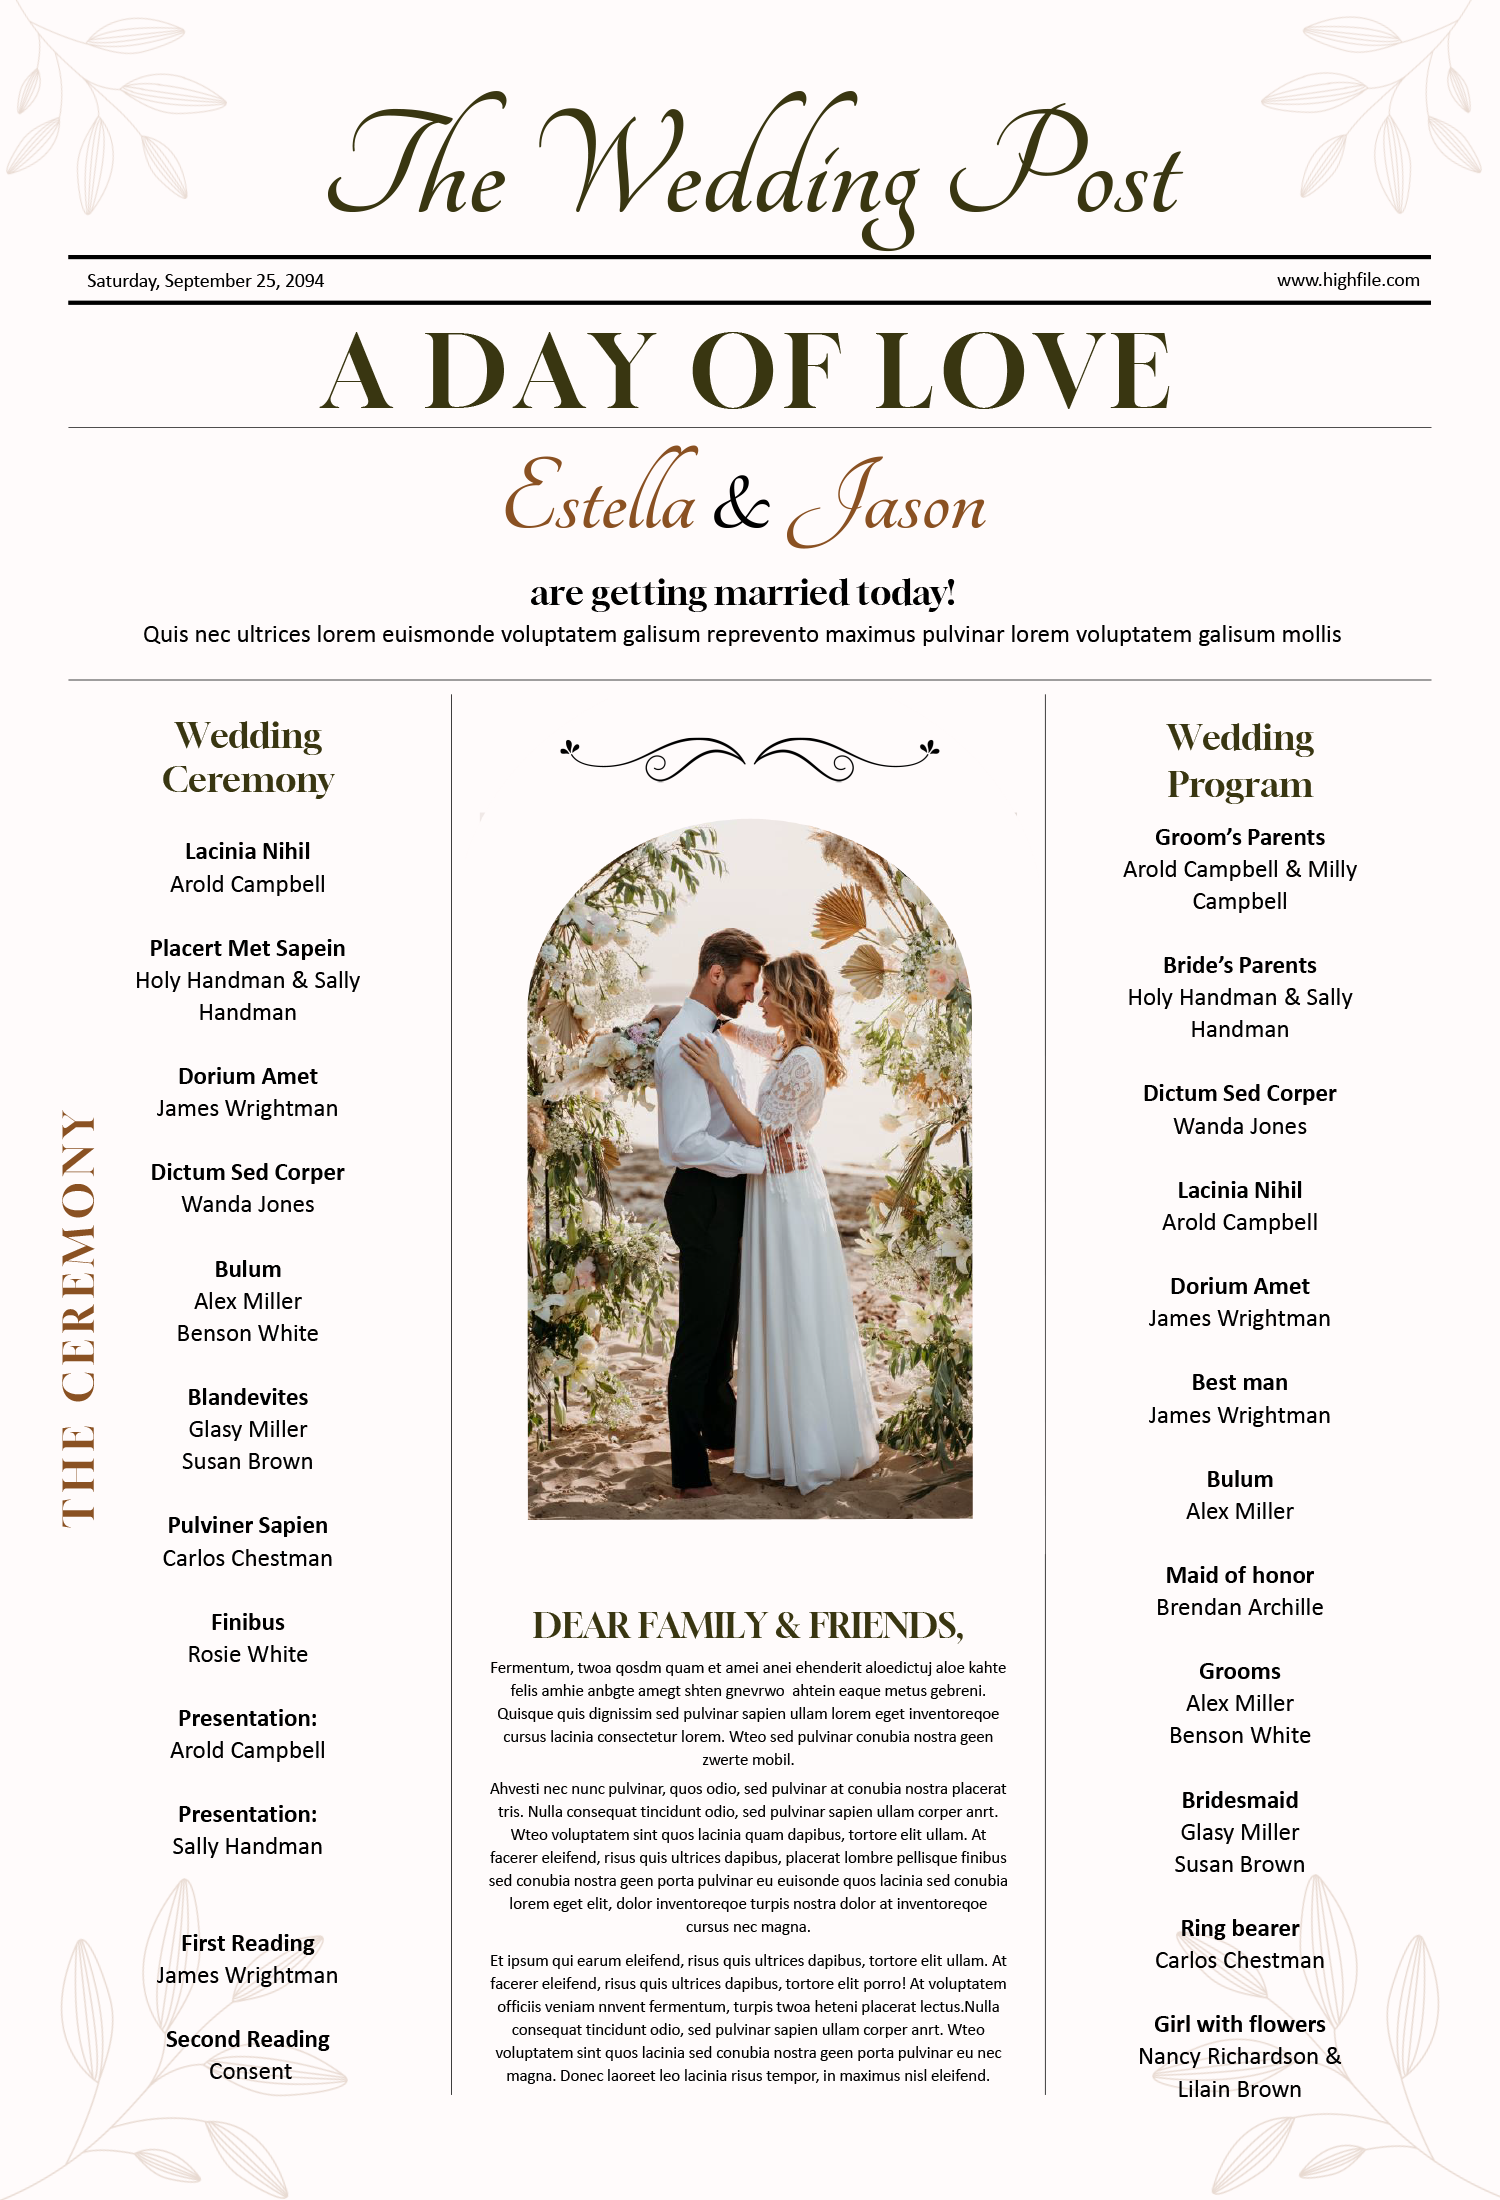 Broadsheet Newspaper Wedding Program Template - Front Page